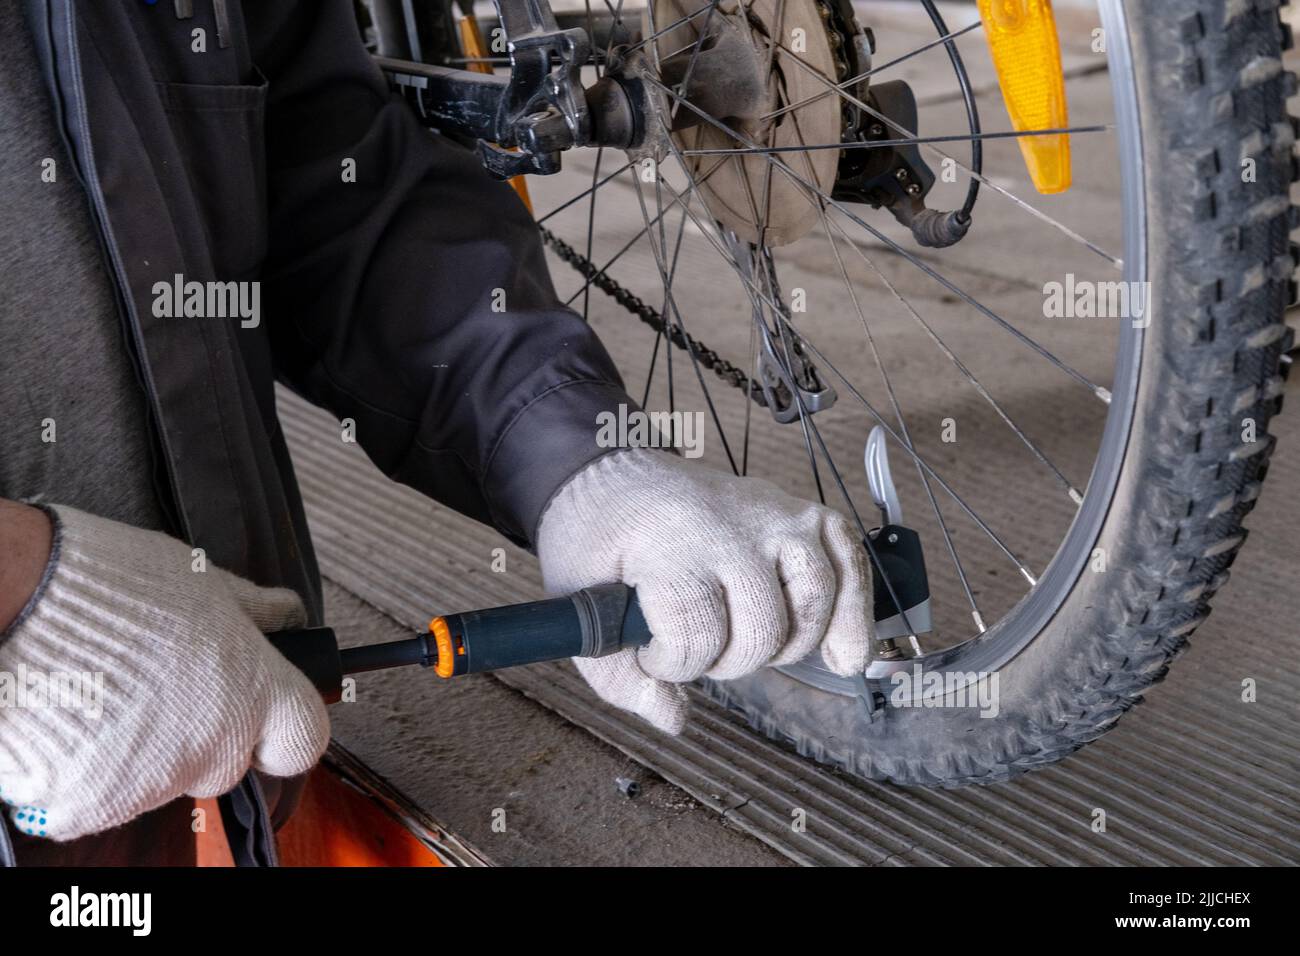 Inflating tires -Fotos und -Bildmaterial in hoher Auflösung – Alamy